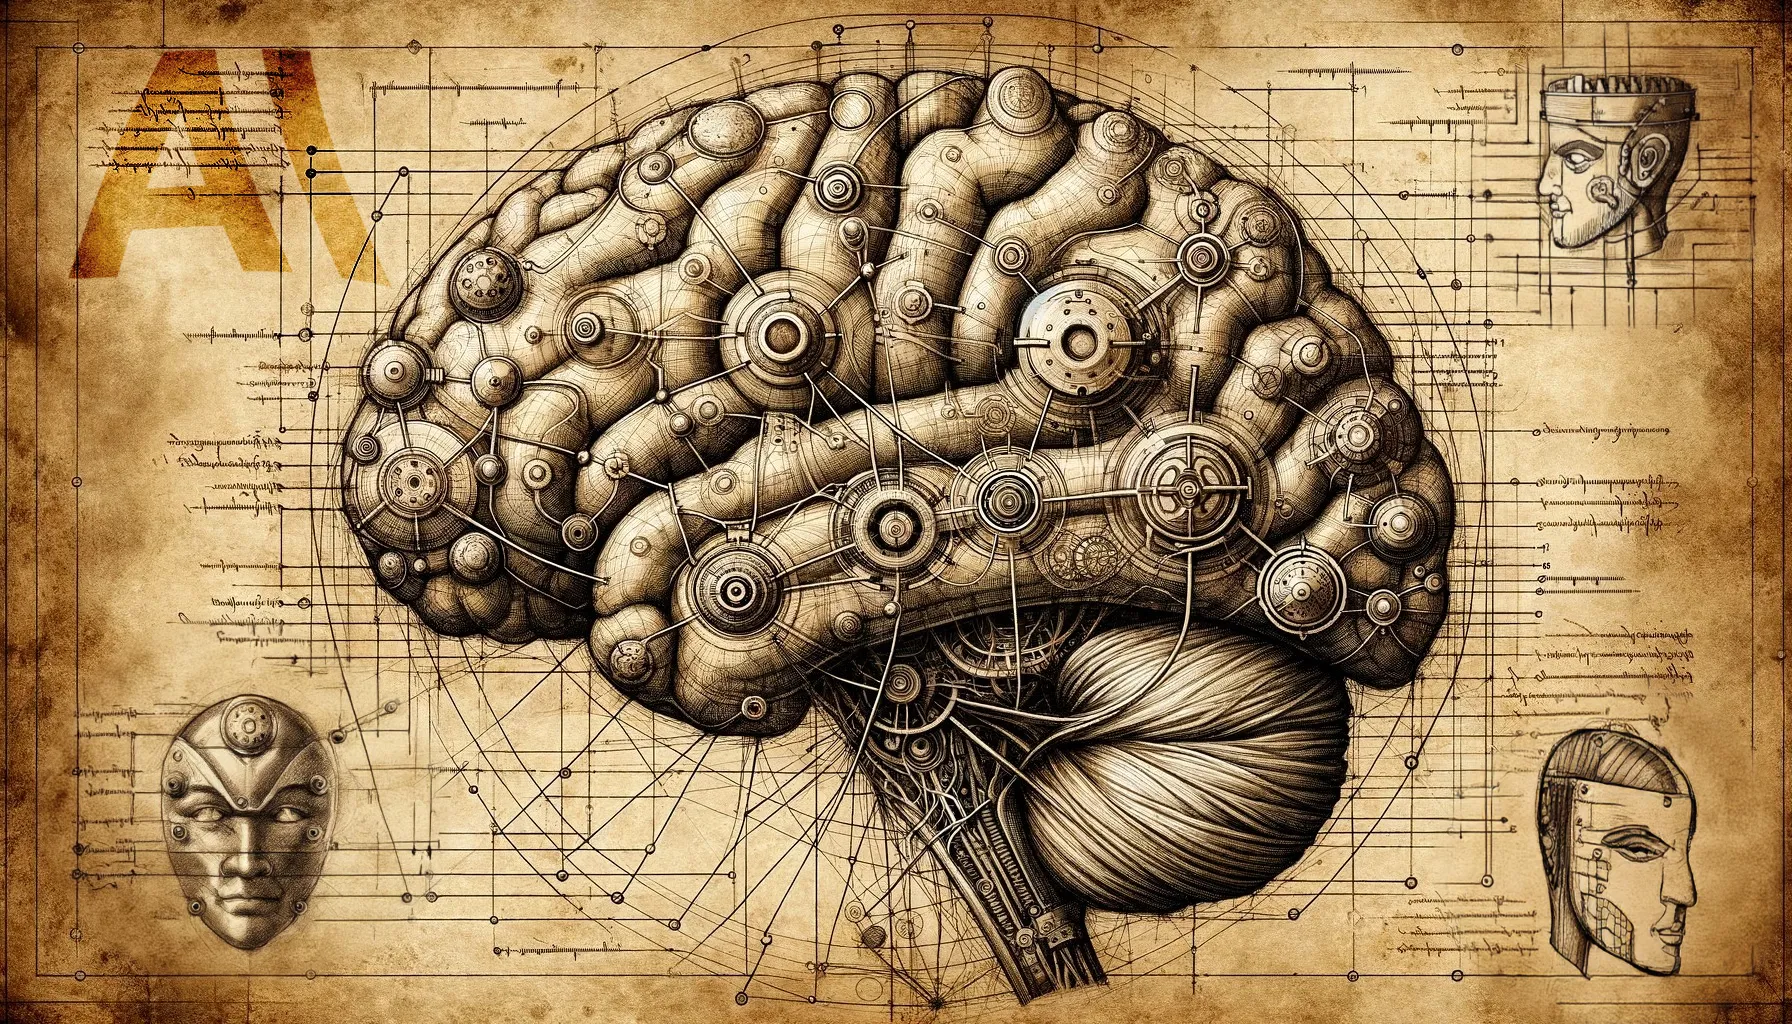 Fantasy blueprint of an AI brain. Image created by Dercypt using AI